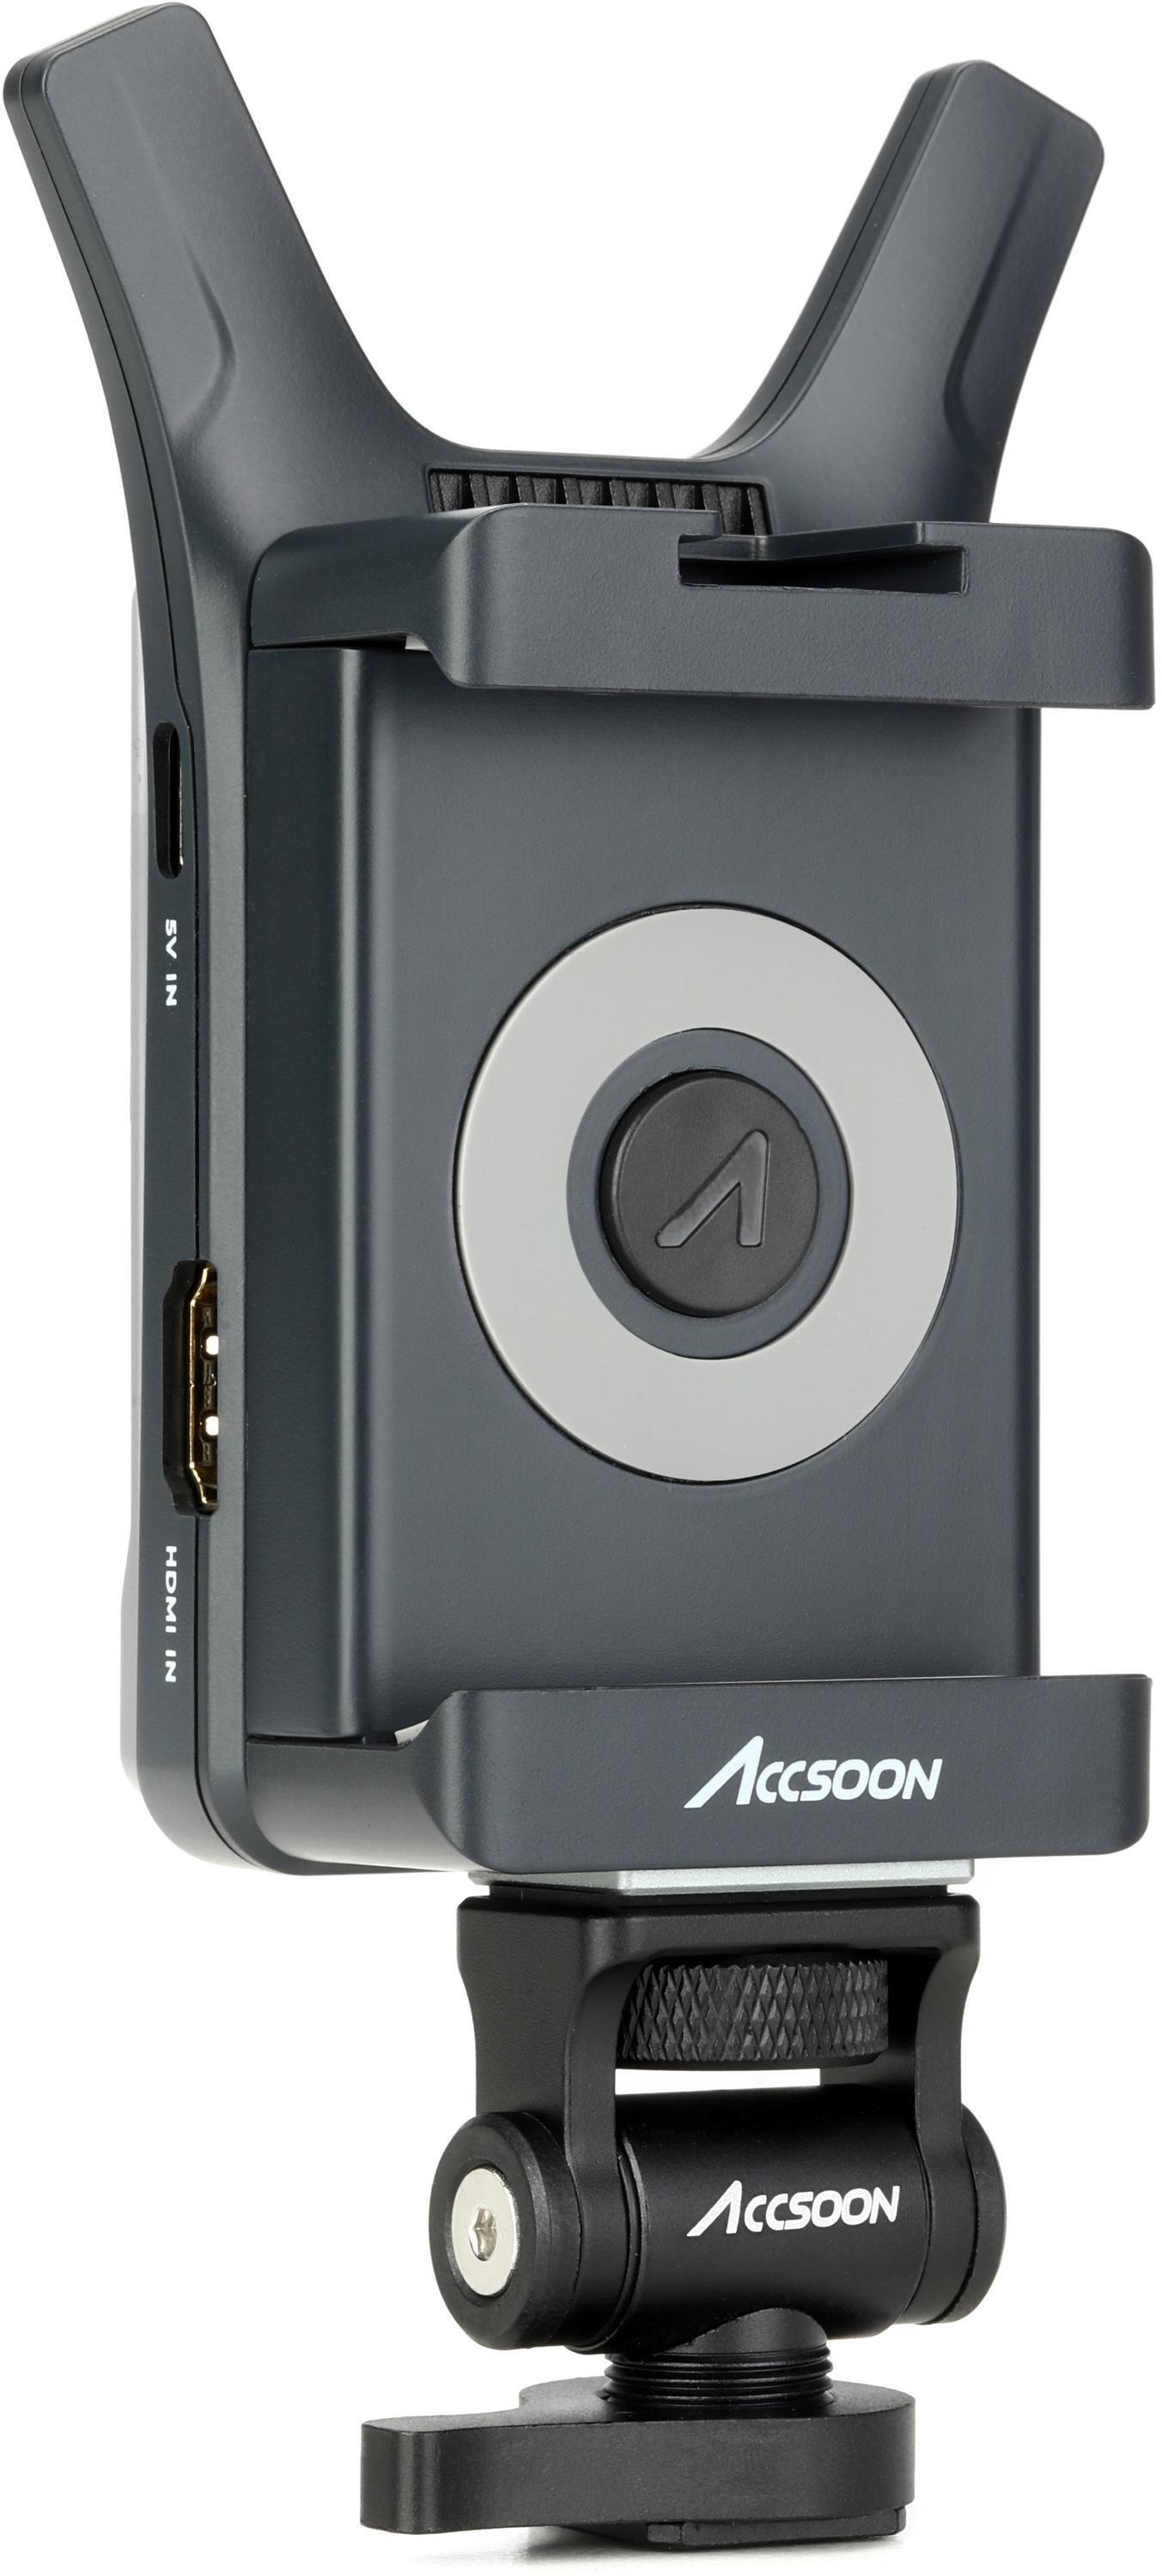 Accsoon CineView Nano Wireless Video Monitoring Transmitter